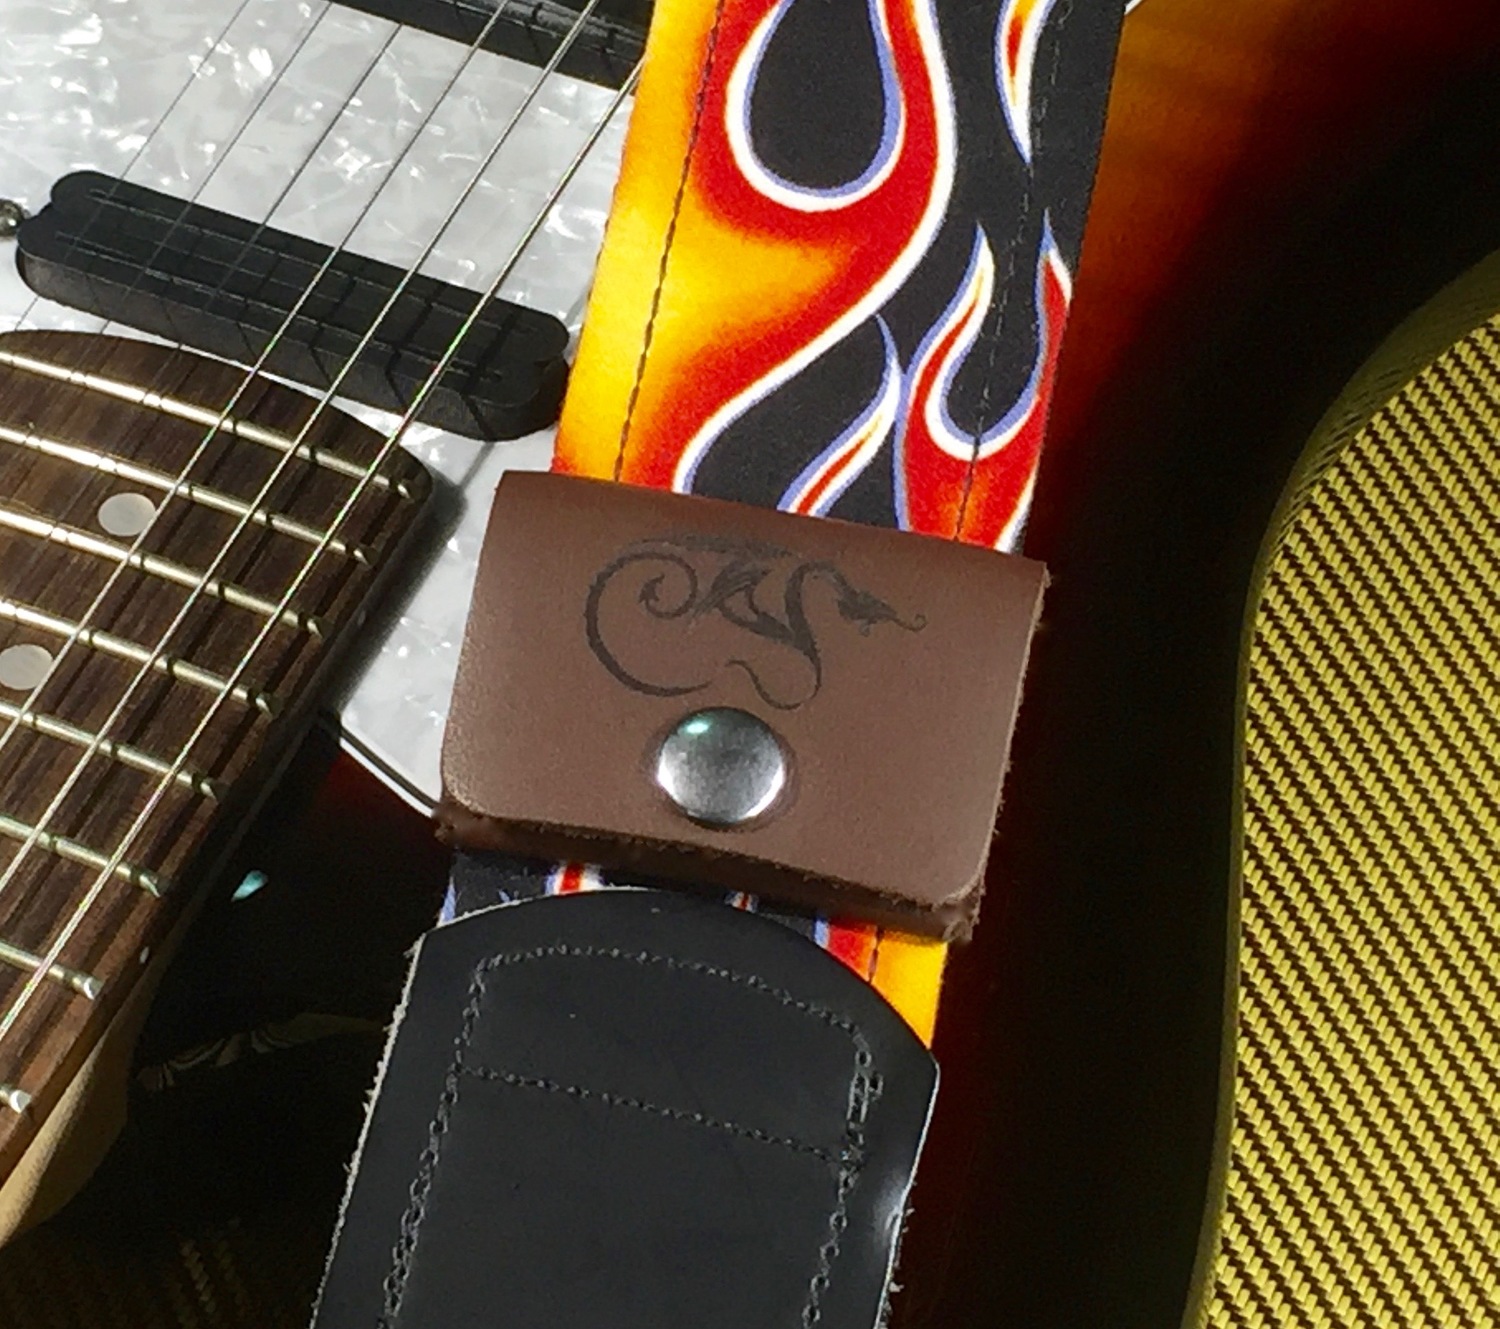 Strap Mounted Guitar Pick Holder - Dragon's Heart Guitar Picks